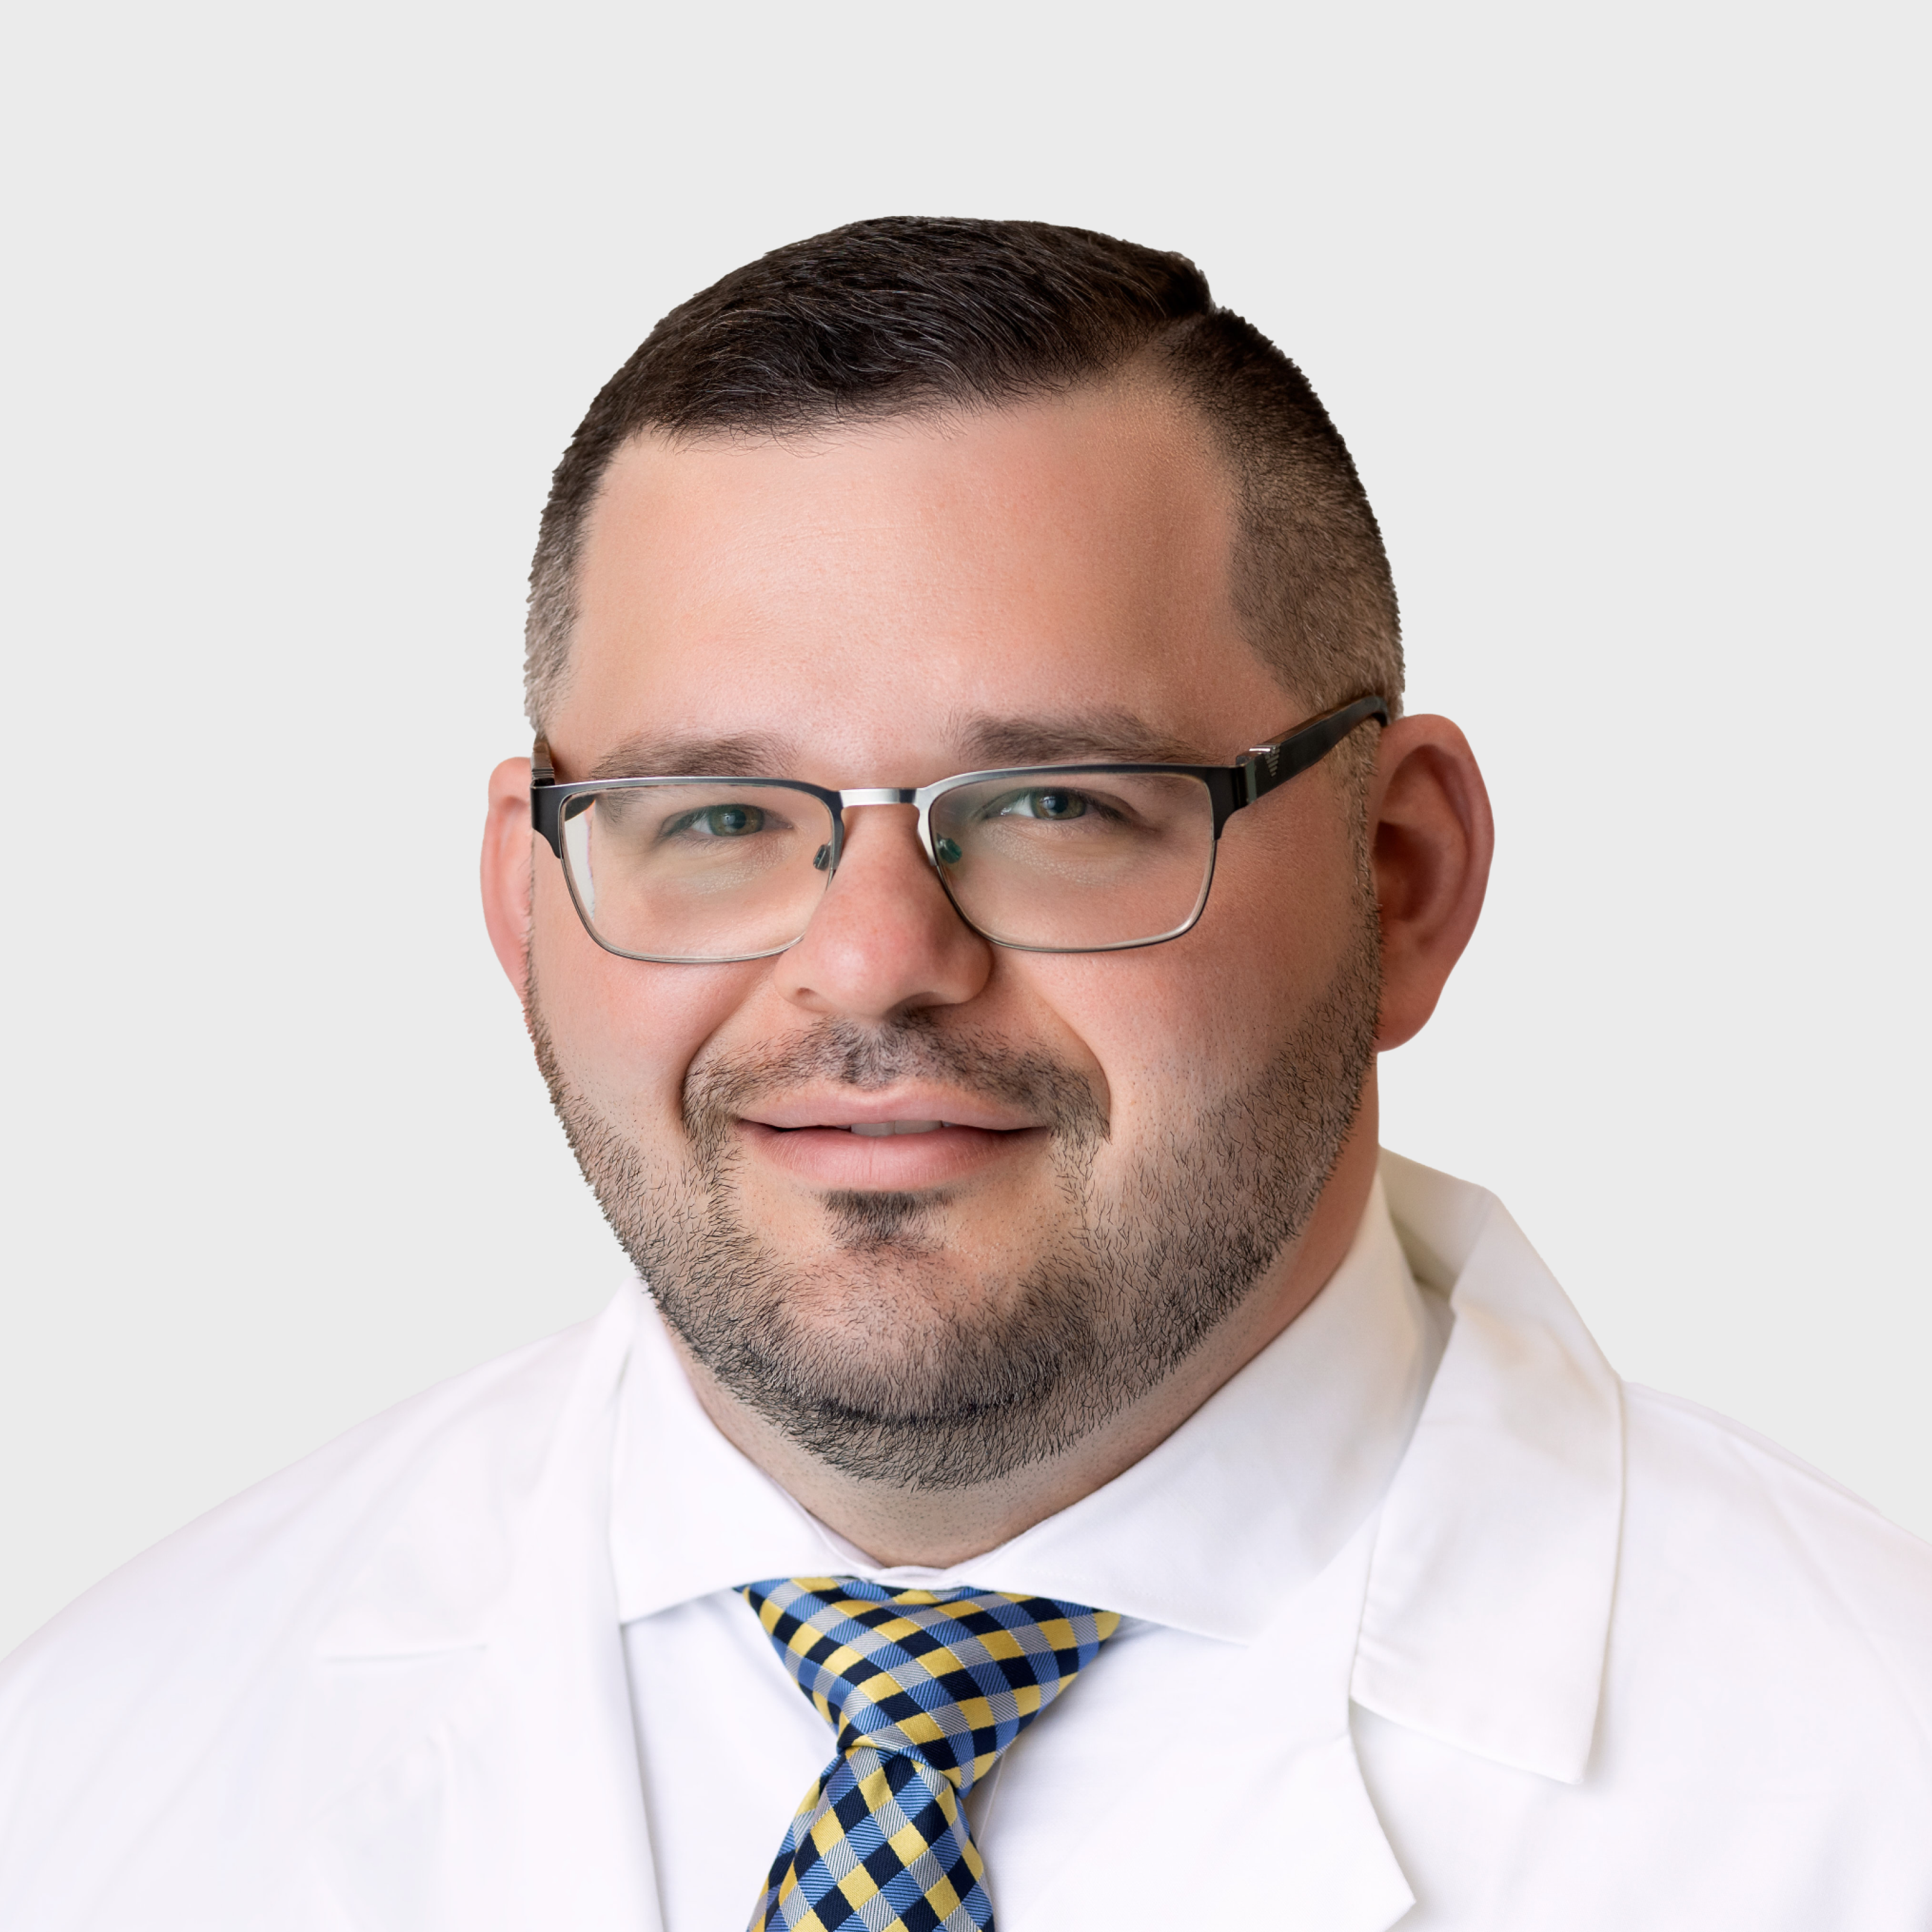 Physician Spotlight on Dr. Jordan Pasternack